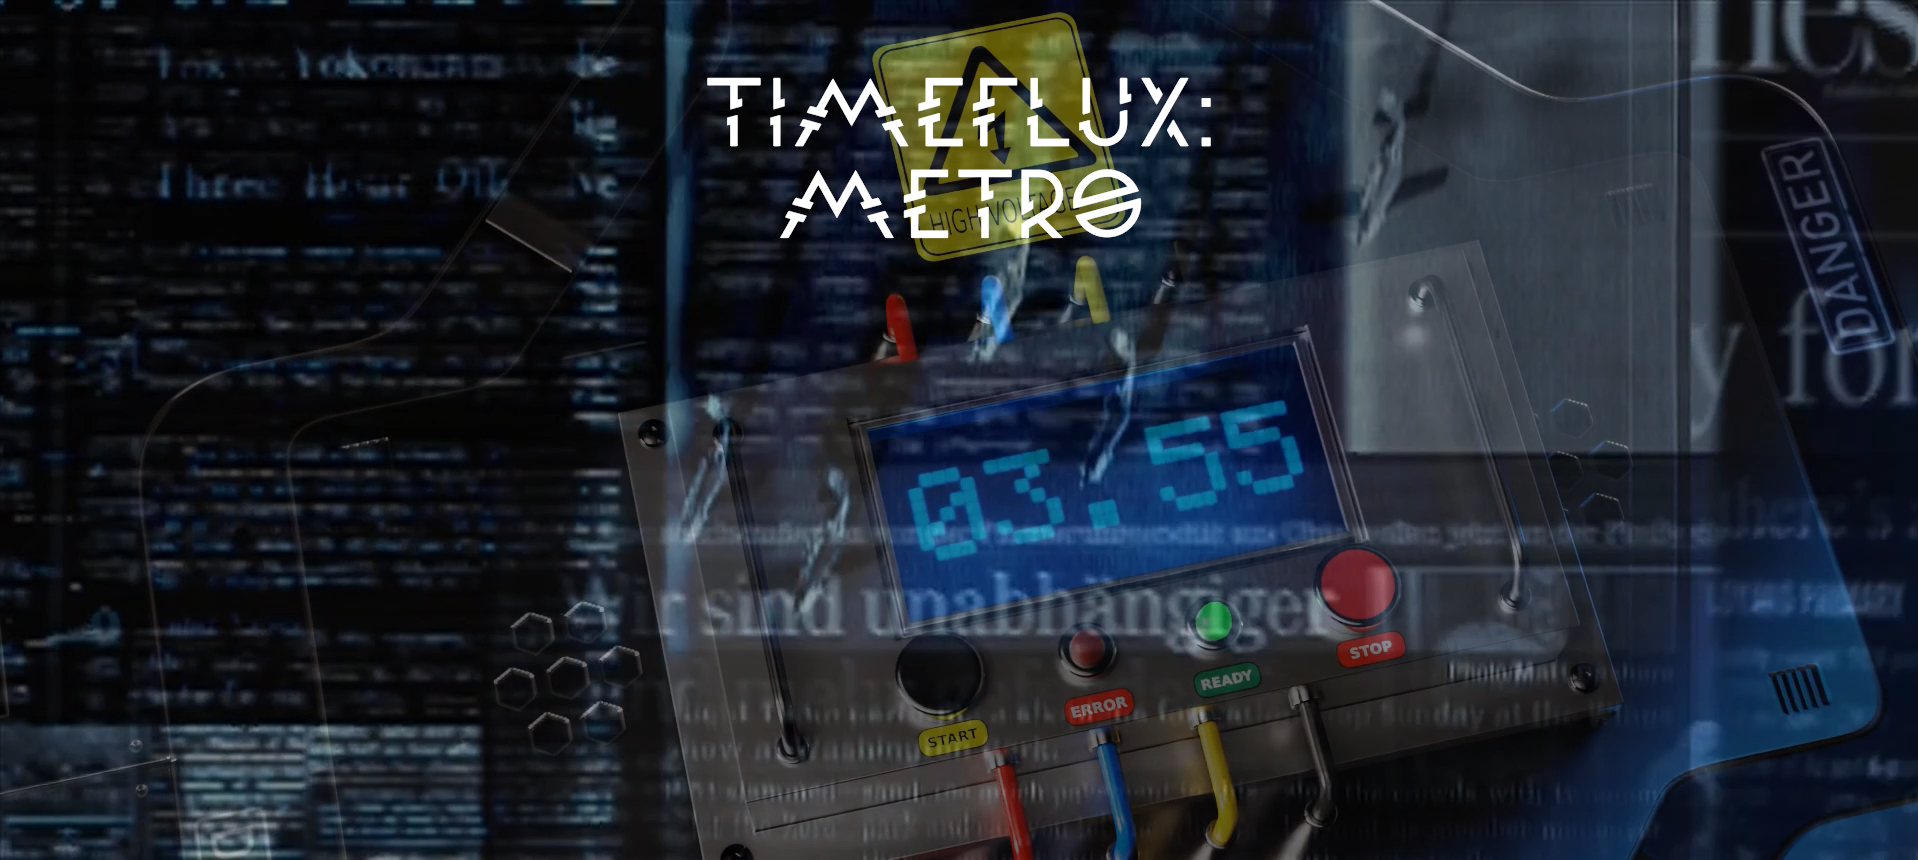 Timeflux: Metro